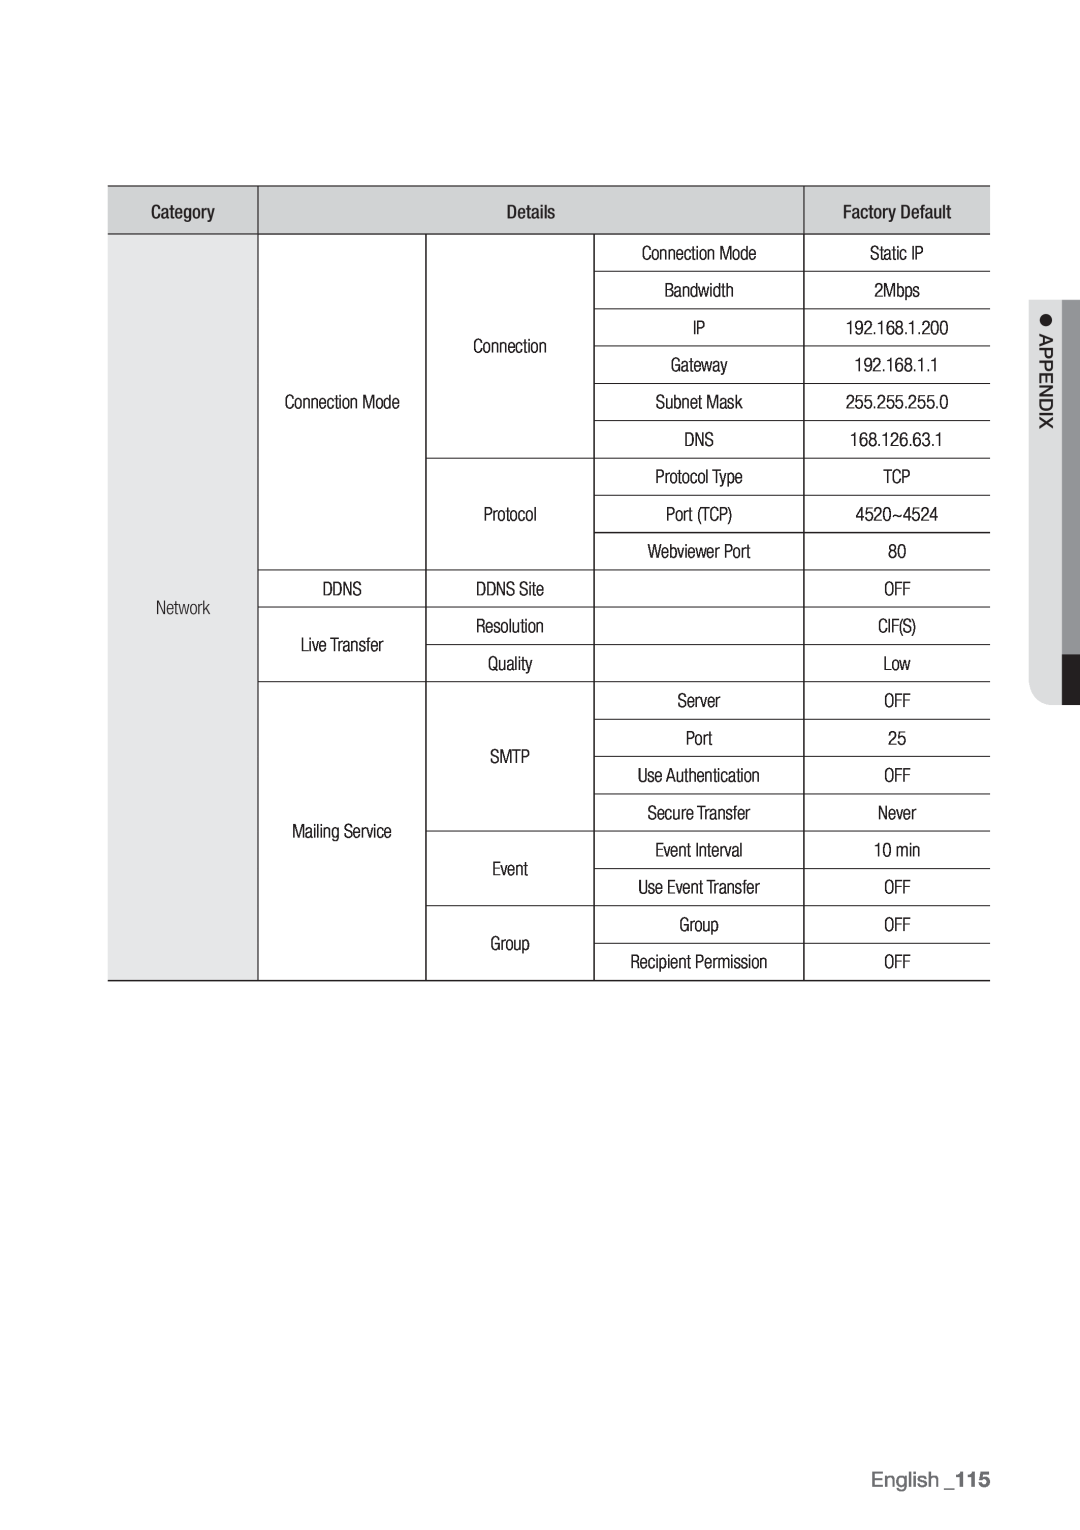 Samsung SDR3100 user manual English _115, Category, Details, Factory Default, Protocol, Ix End!App 